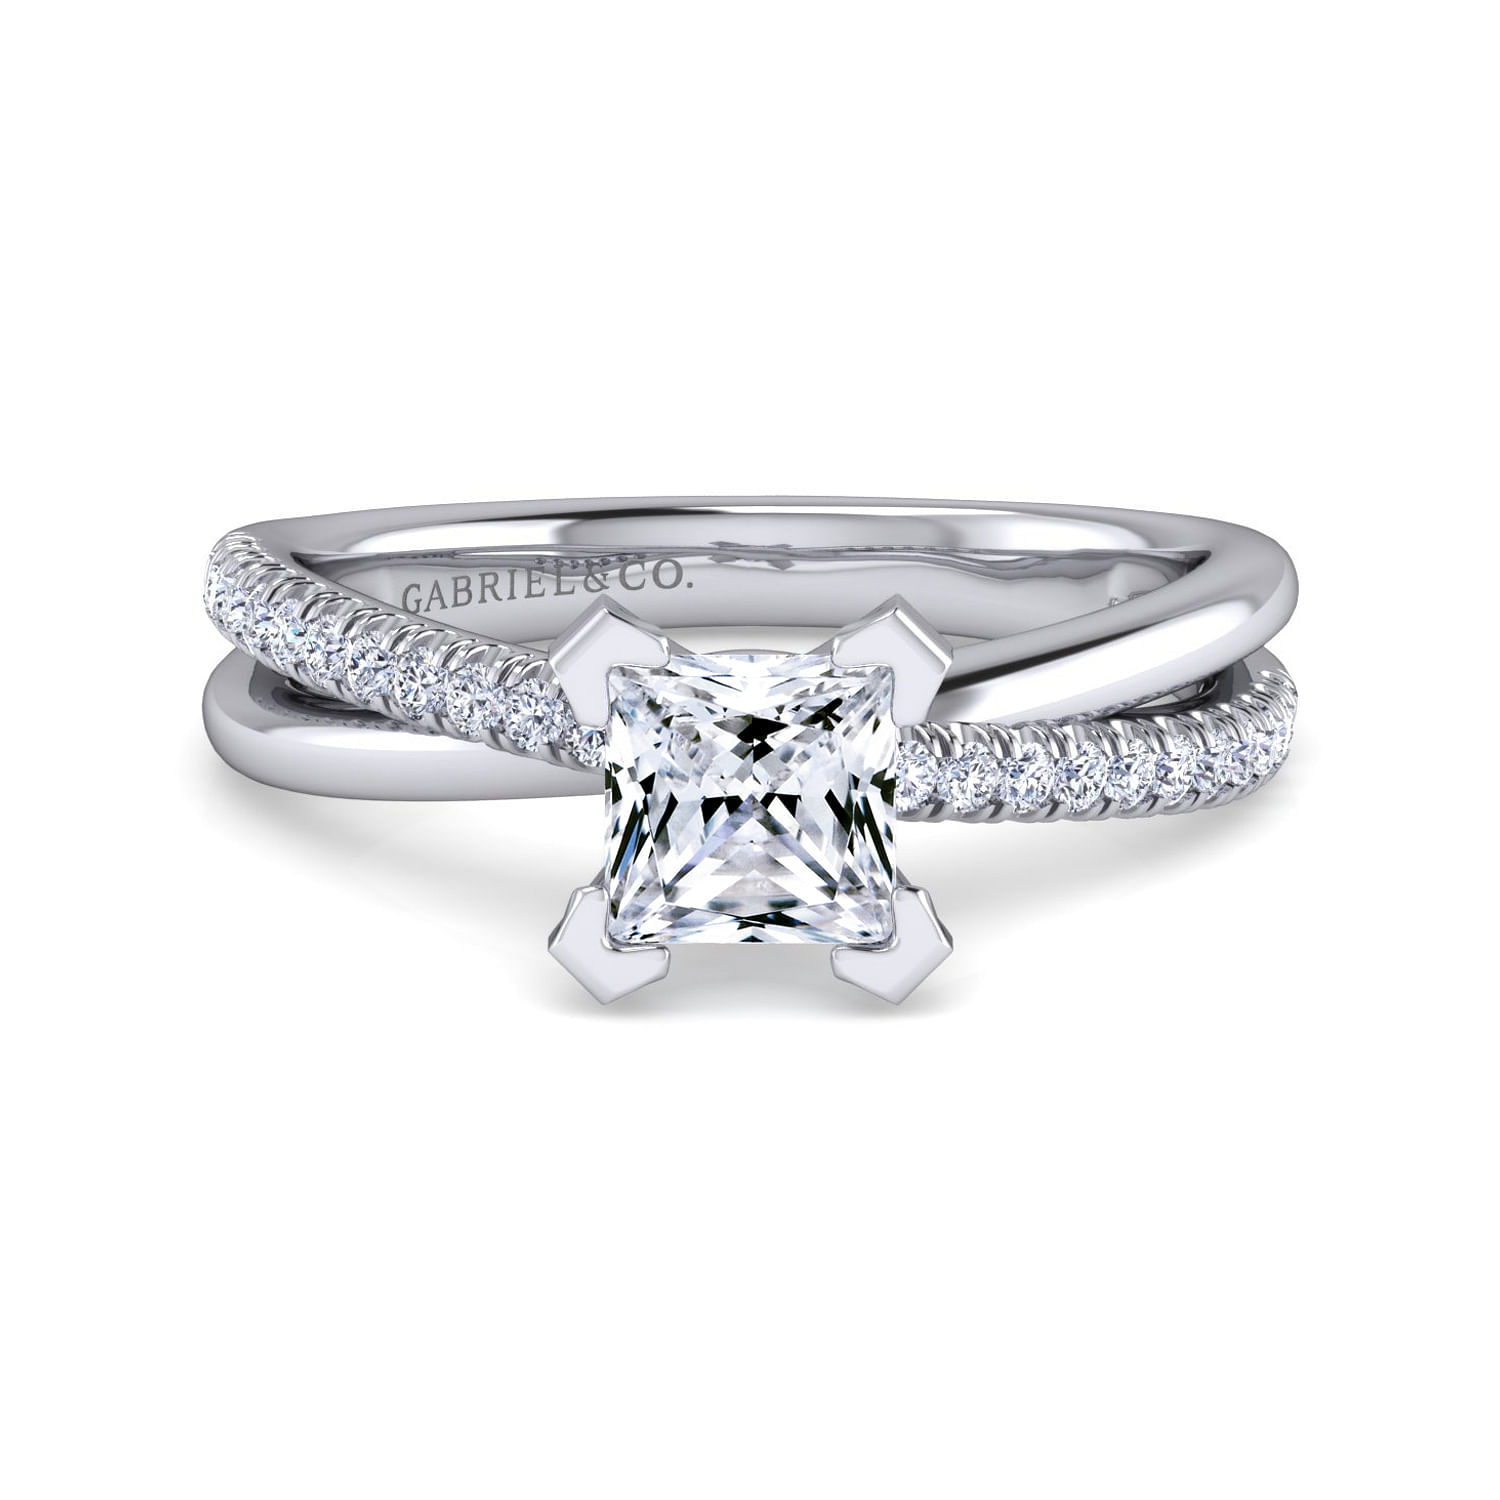 Morgan - 14K White Gold Princess Cut Diamond Engagement Ring